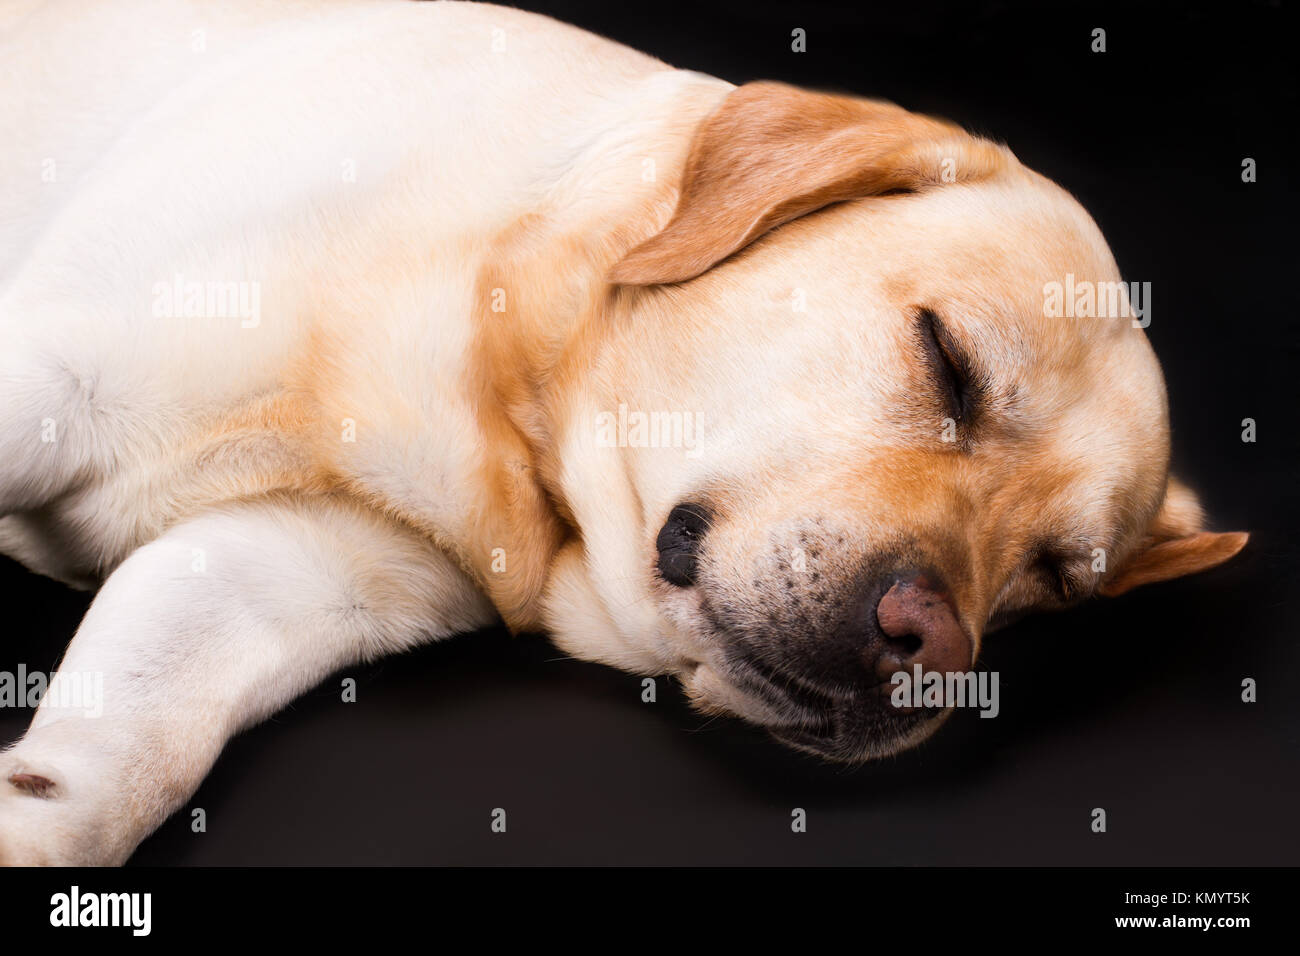 Cute yellow sleeping labrador, studio portrait. Stock Photo